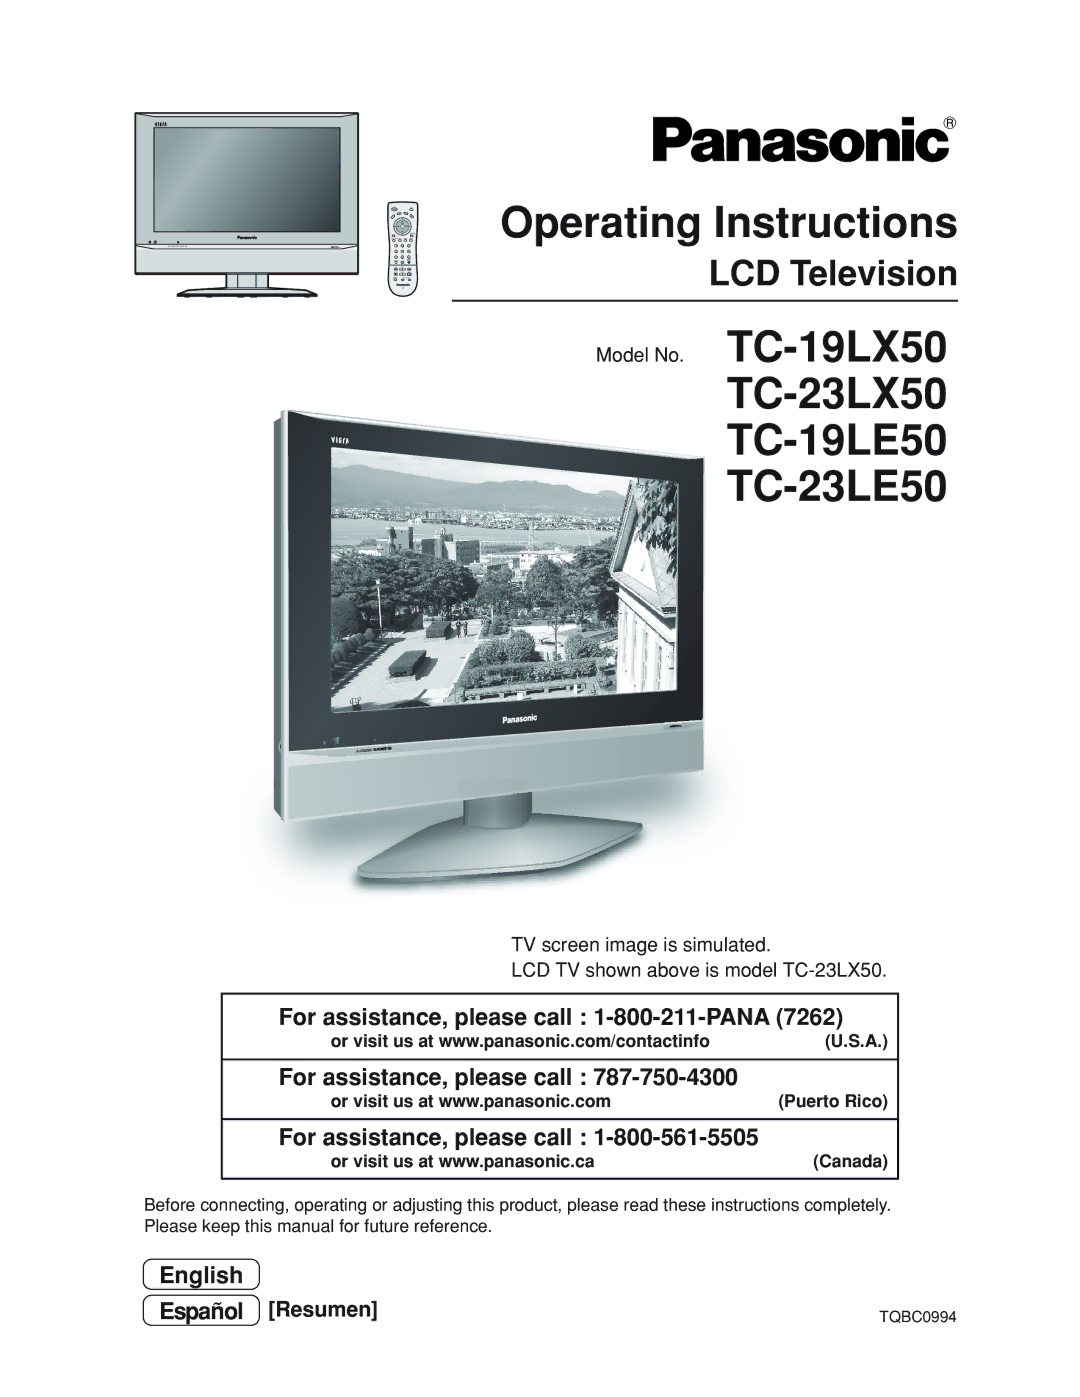 Panasonic TC 19LX50 manual Operating Instructions, TC-23LX50 TC-19LE50 TC-23LE50, LCD Television, Canada 